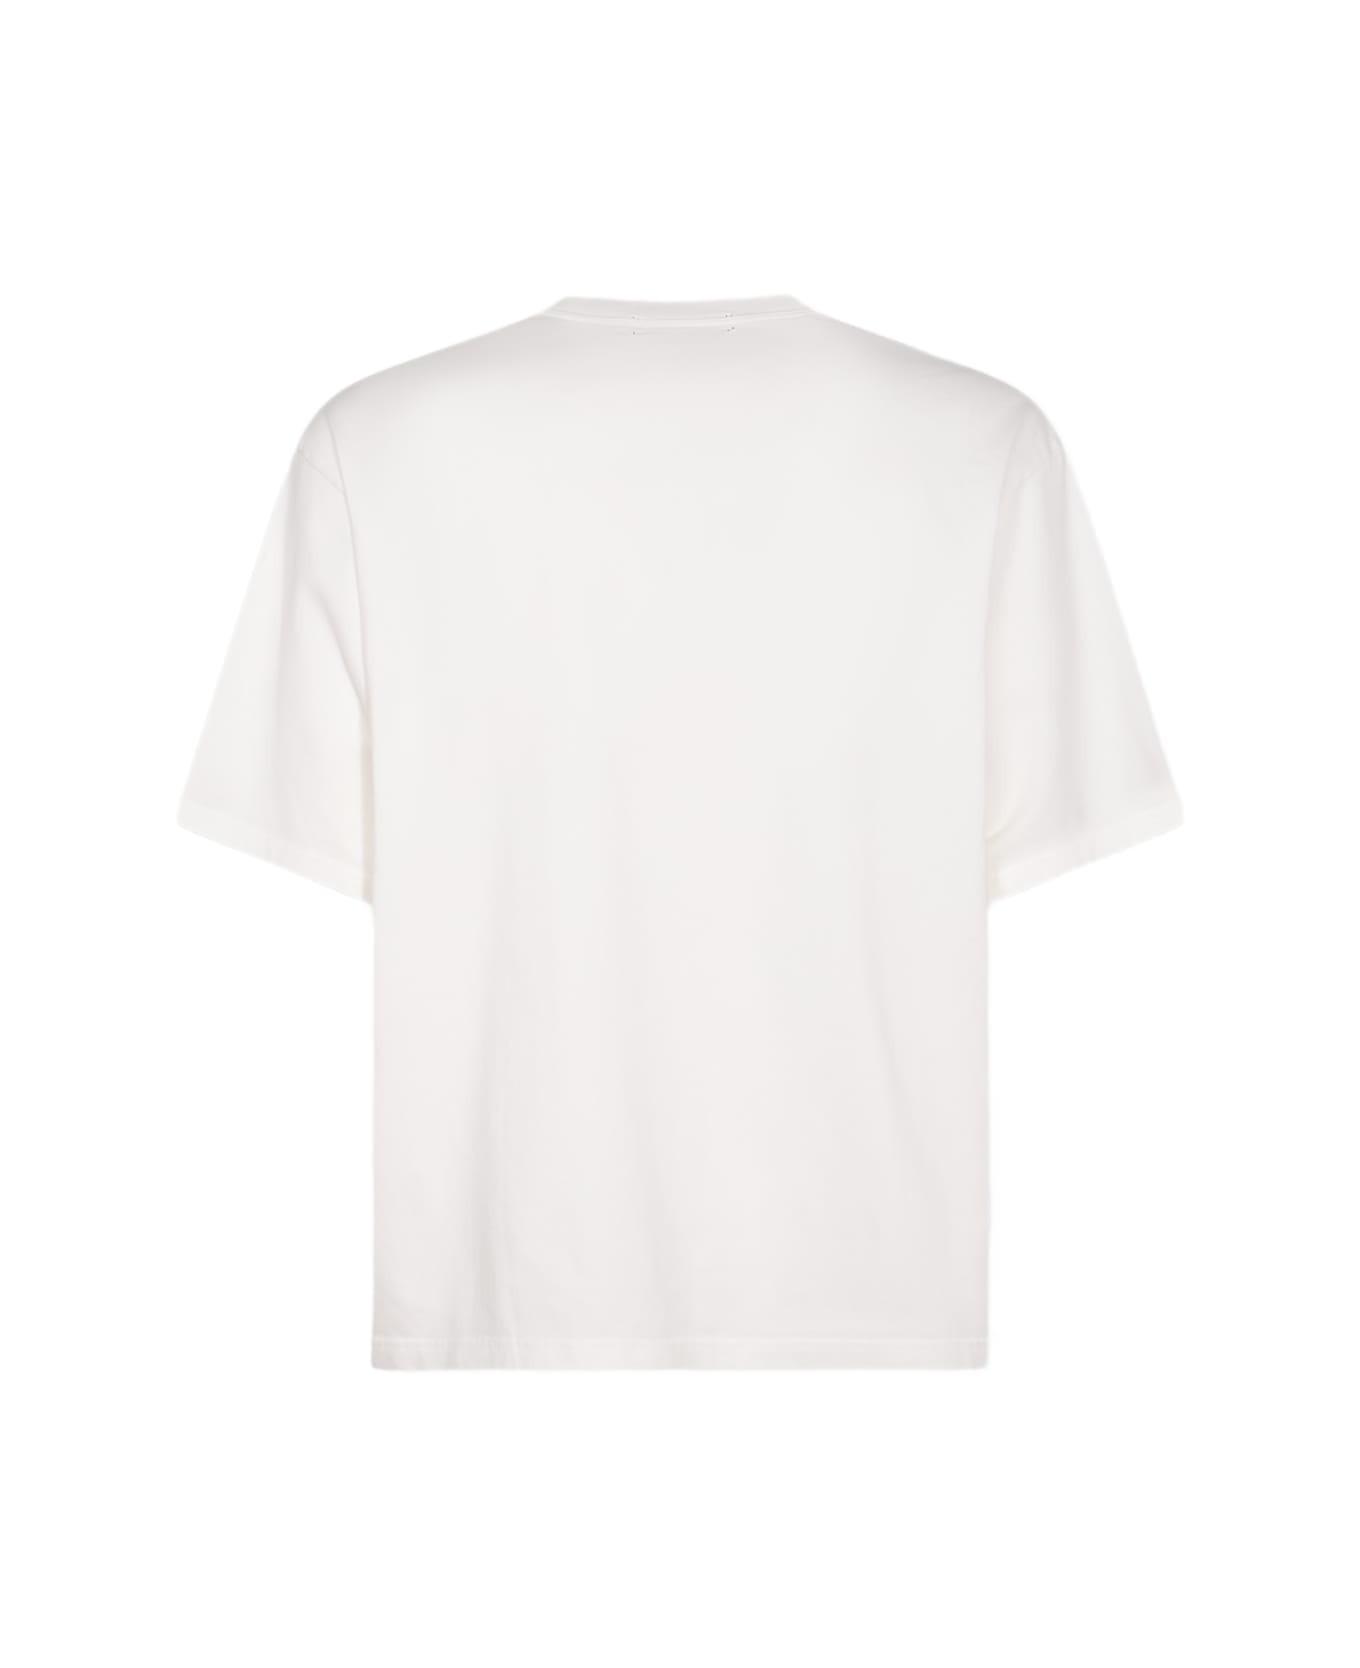 Undercover Jun Takahashi White Cotton Kosmik T-shirt